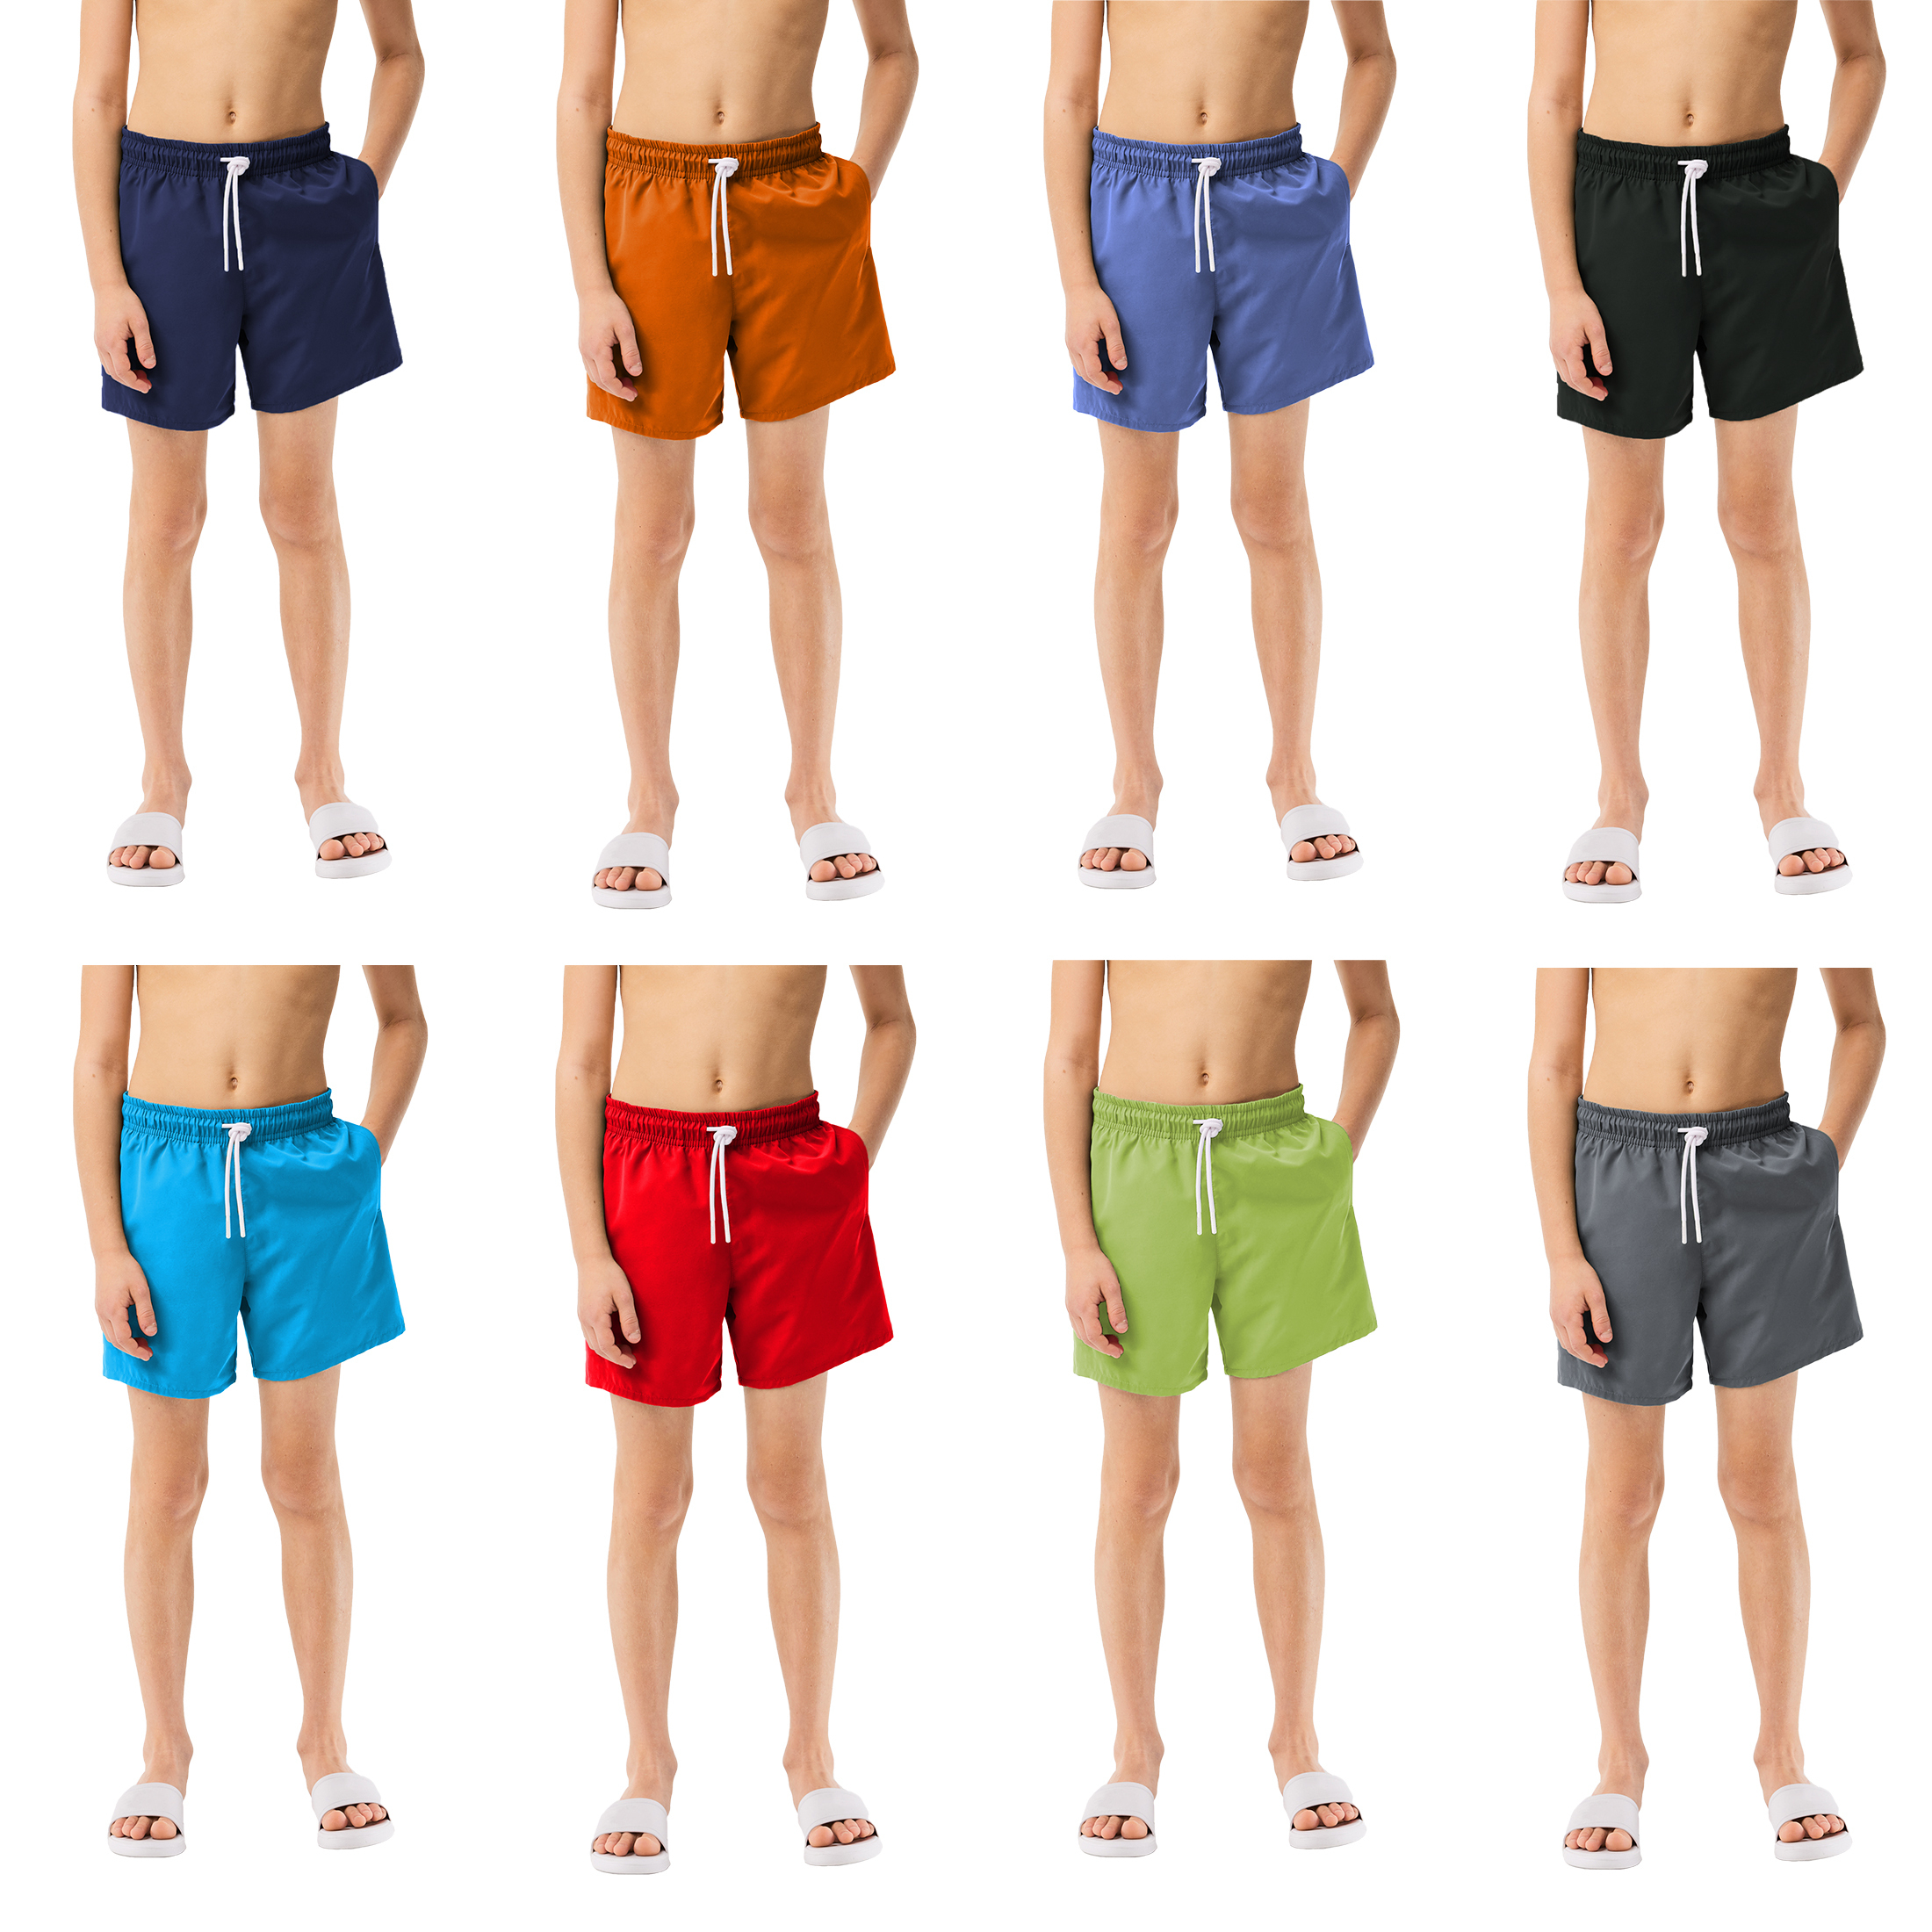 3-Pack Boy's Beach Swim Trunk Shorts Quick Dry UPF 50+ Little Boys Bathing Summer Swimsuit - XL